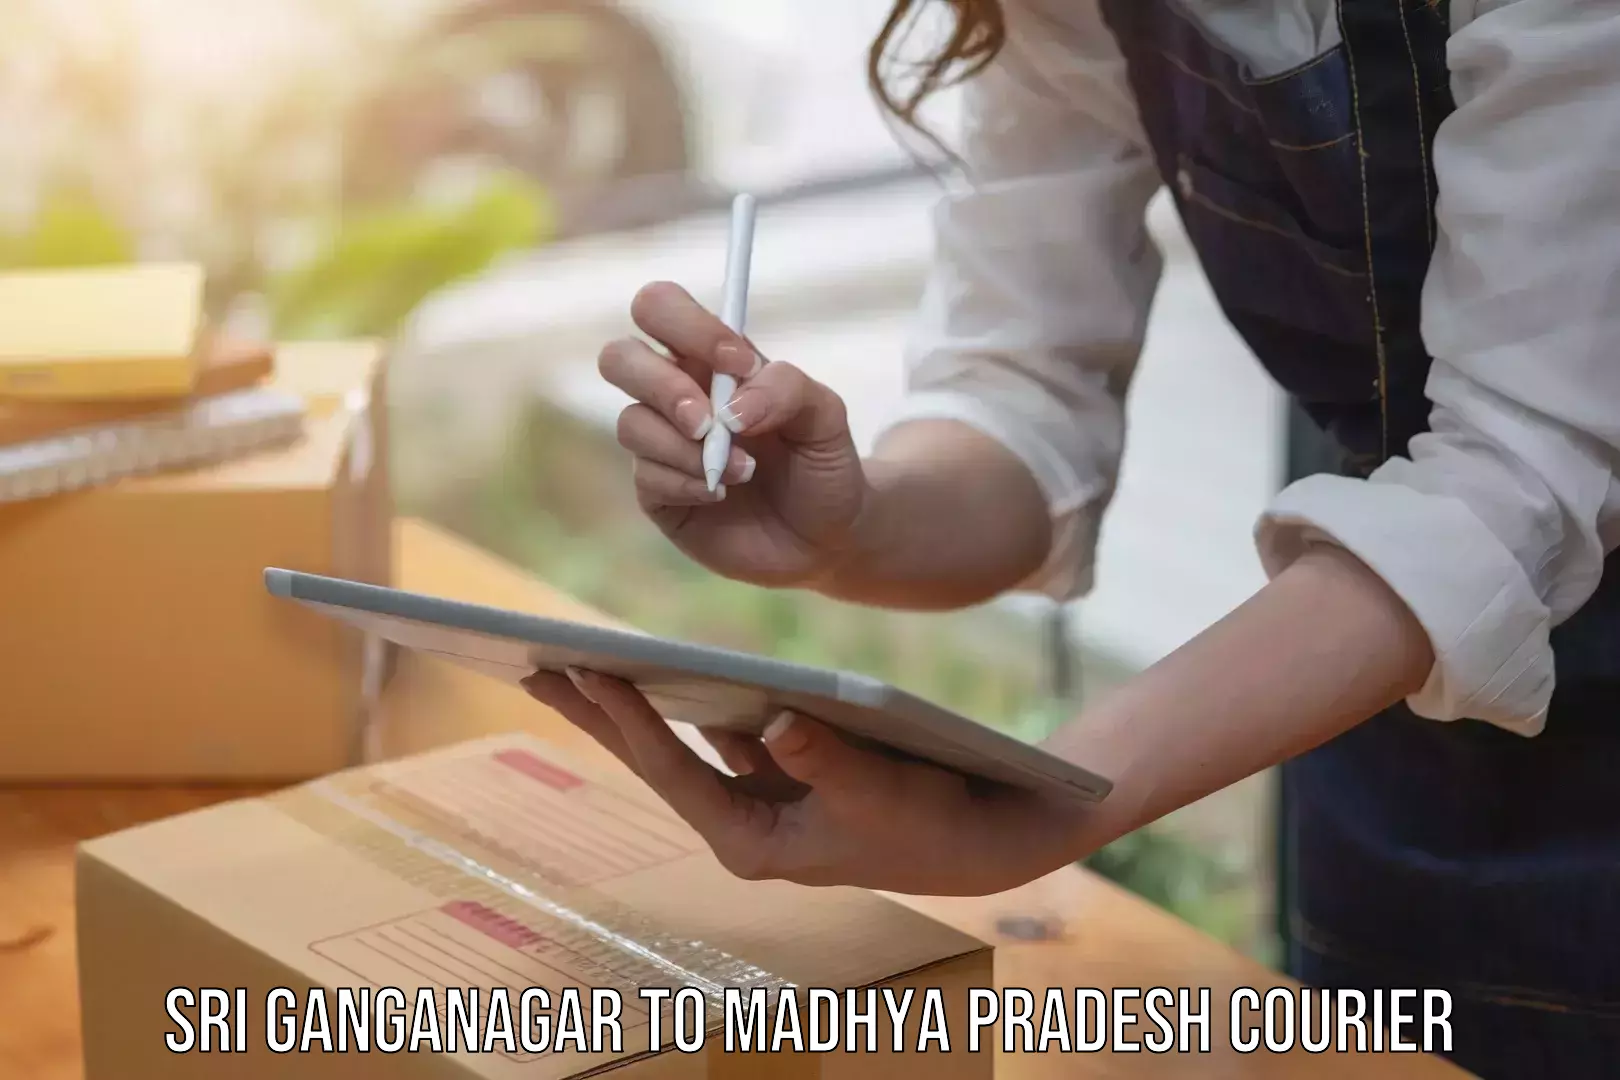 Courier service booking Sri Ganganagar to Deosar